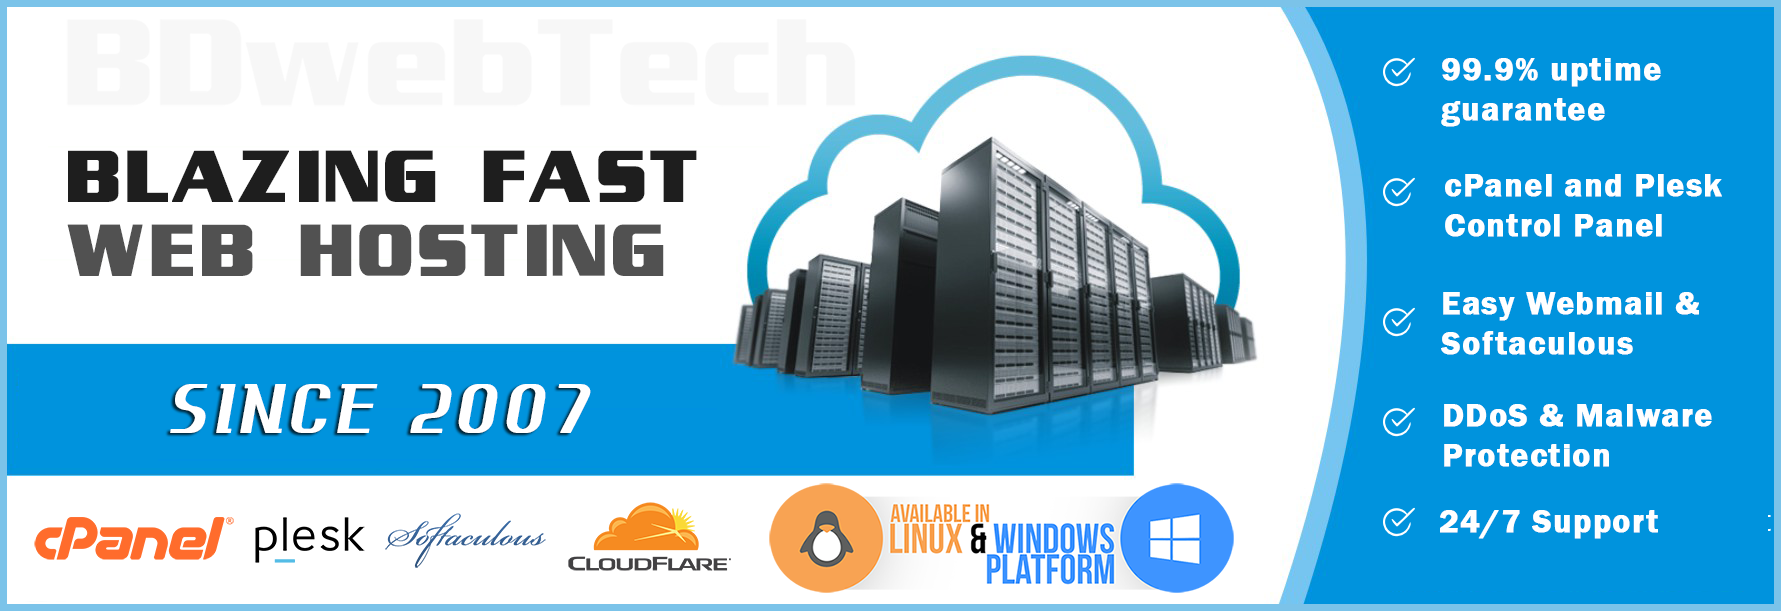 bdwebtech web hosting banner